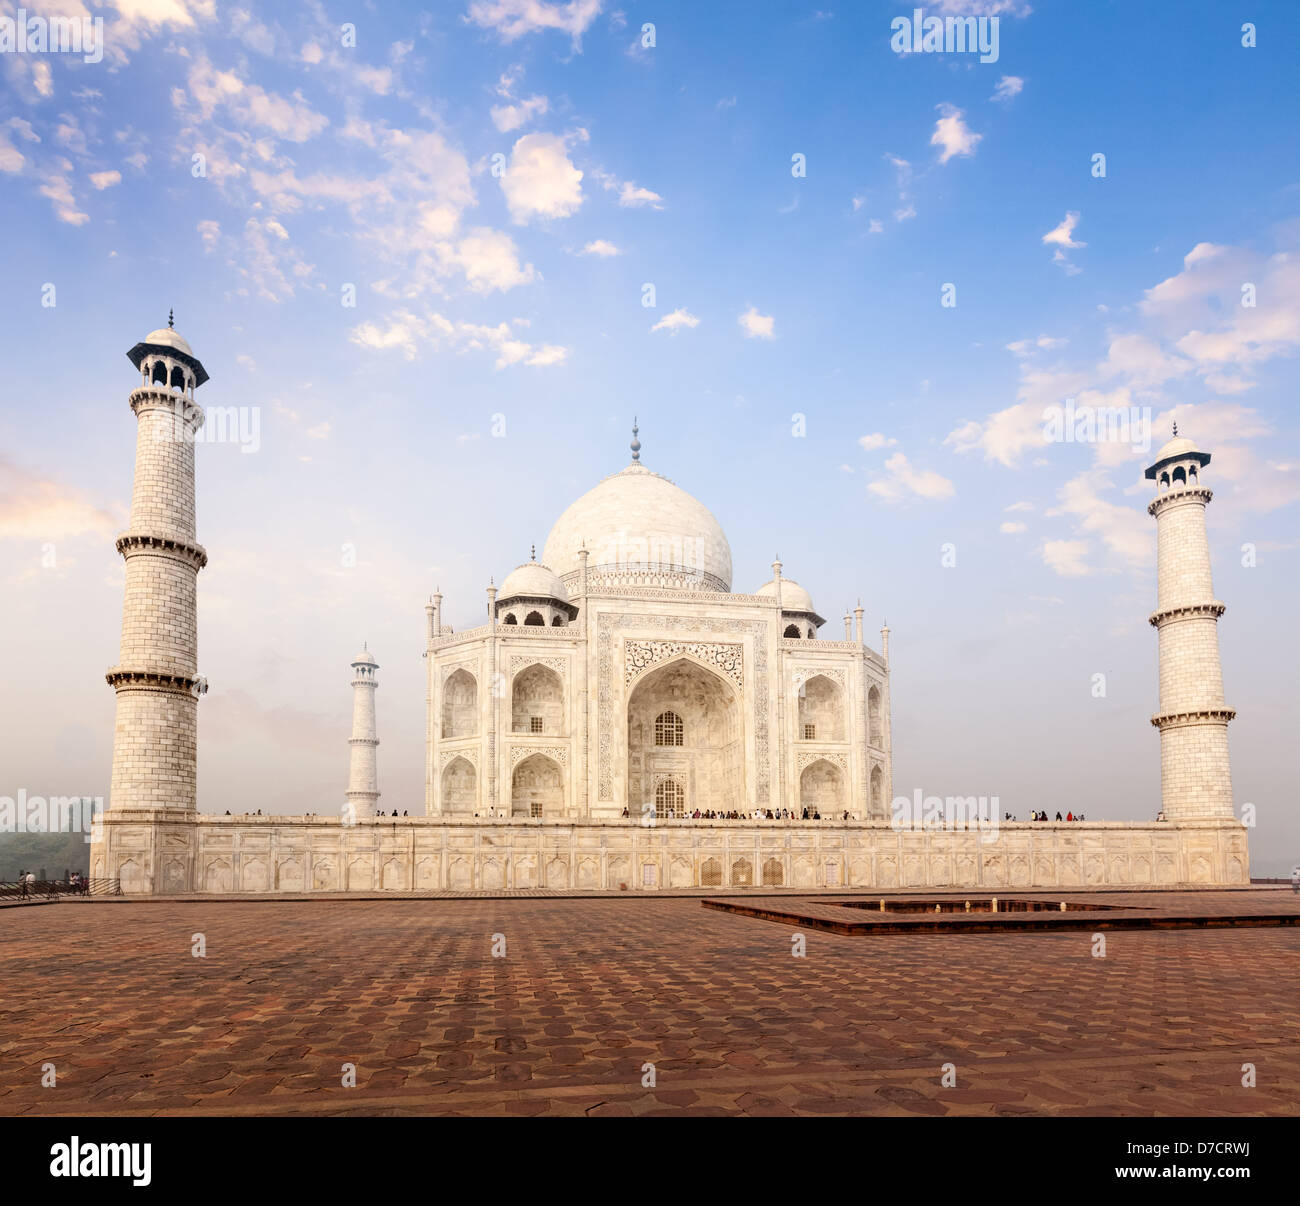 Taj Mahal. Simbolo indiano - India travel background. Agra, India Foto Stock